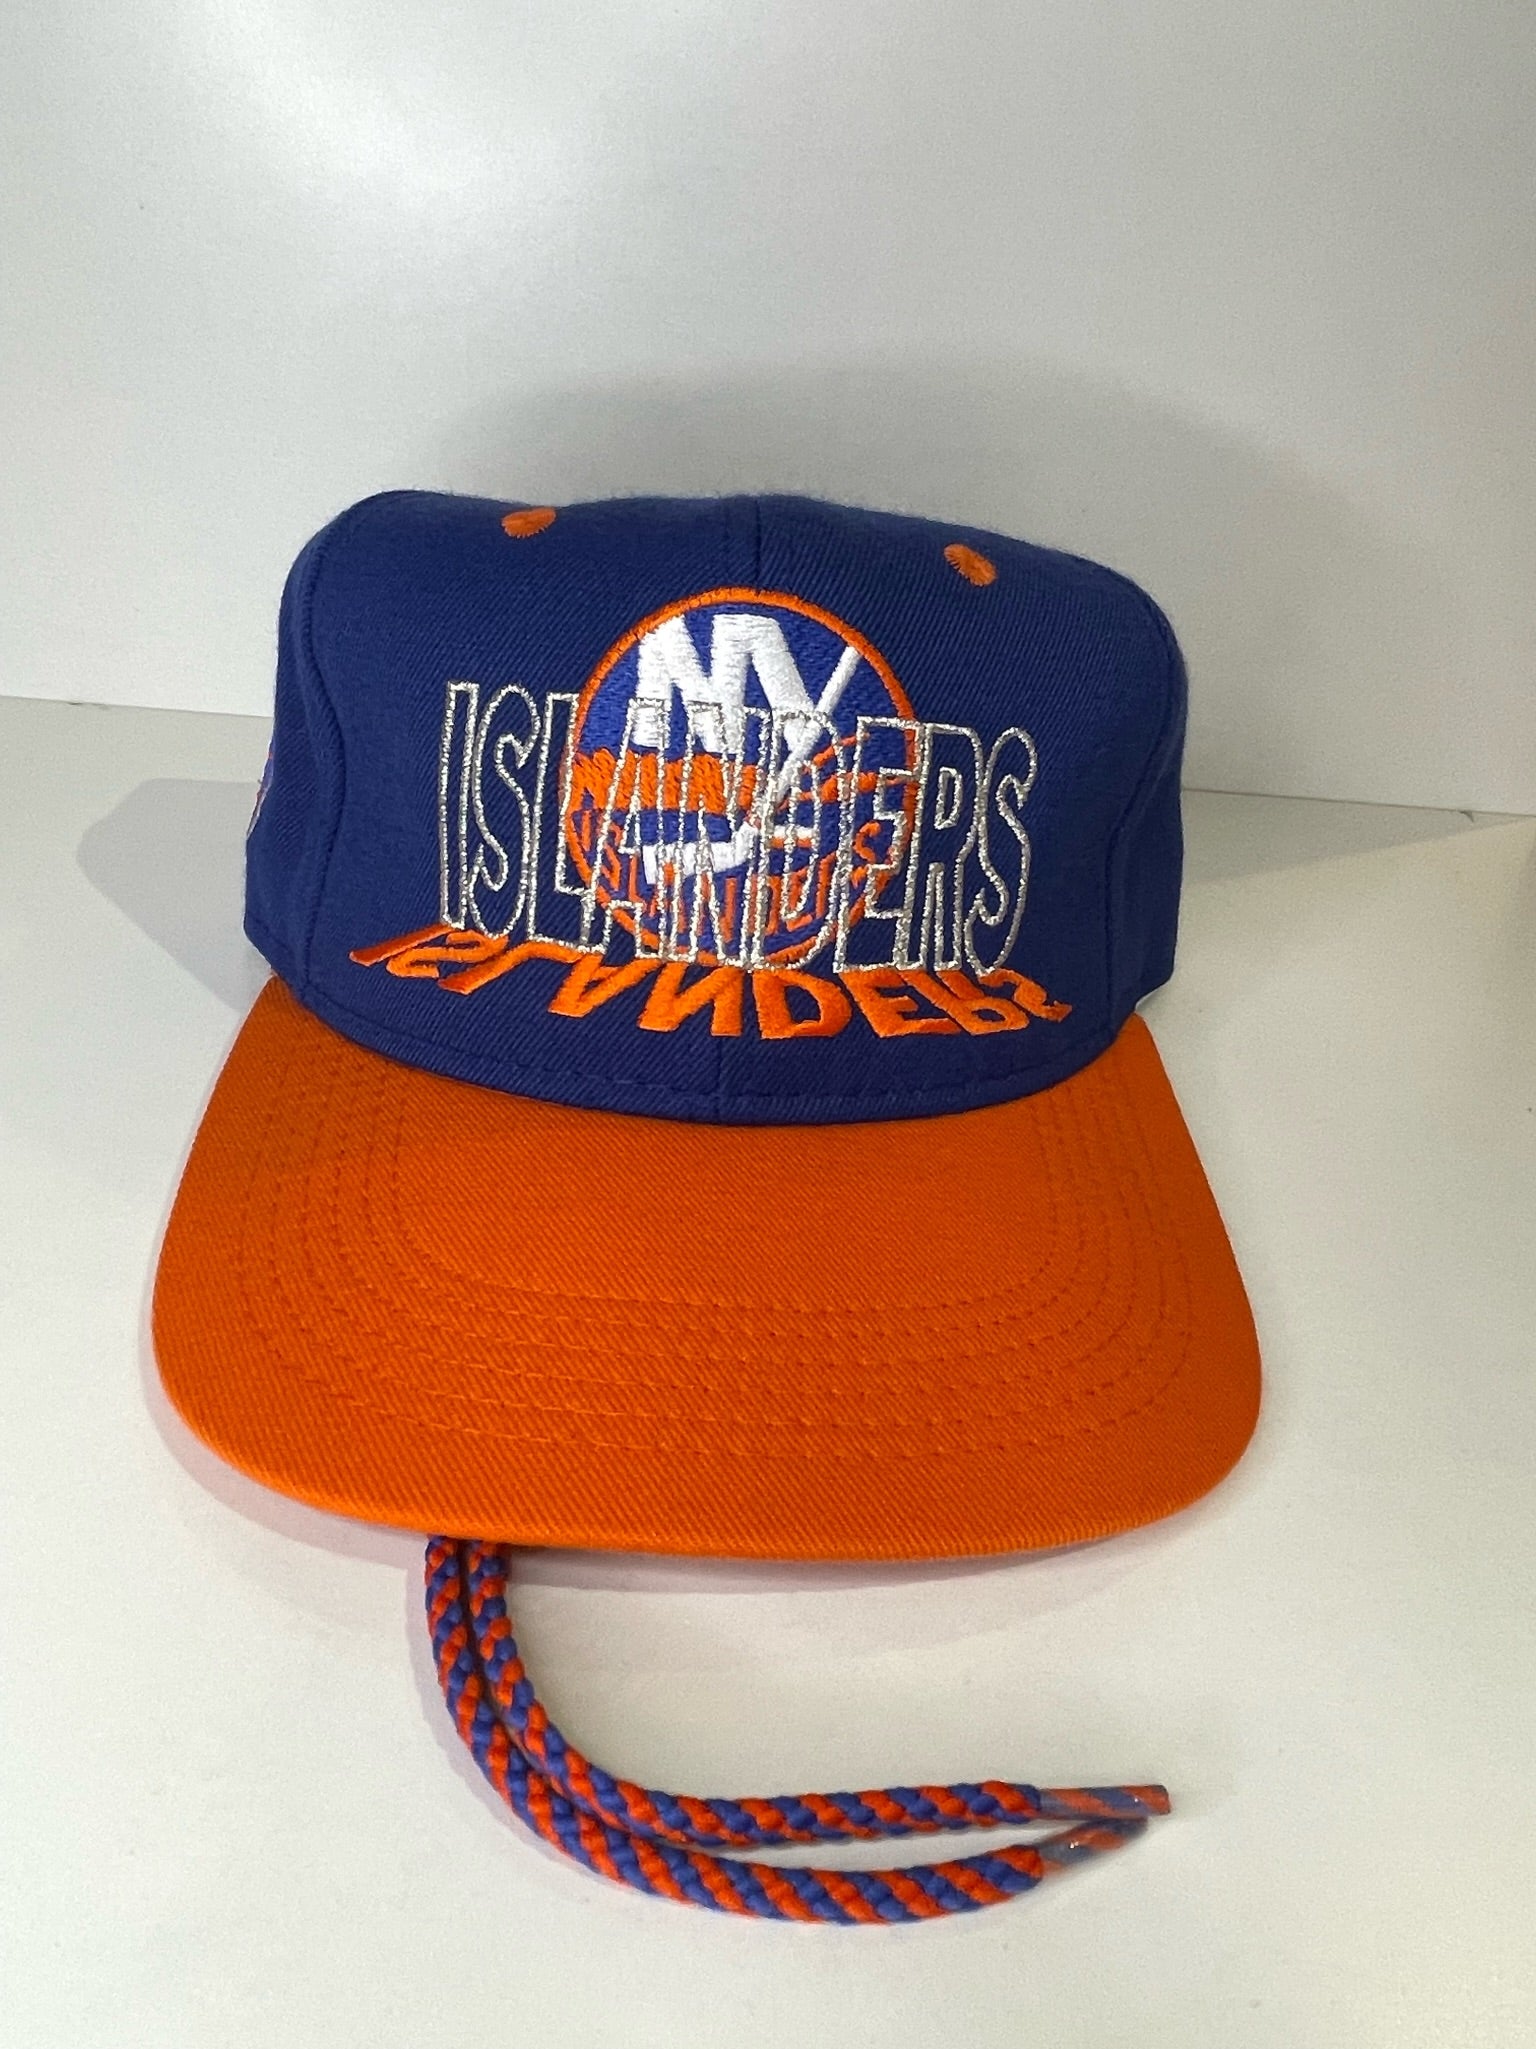 MITCHELL & NESS NEW YORK ISLANDERS BASEBALL CAP